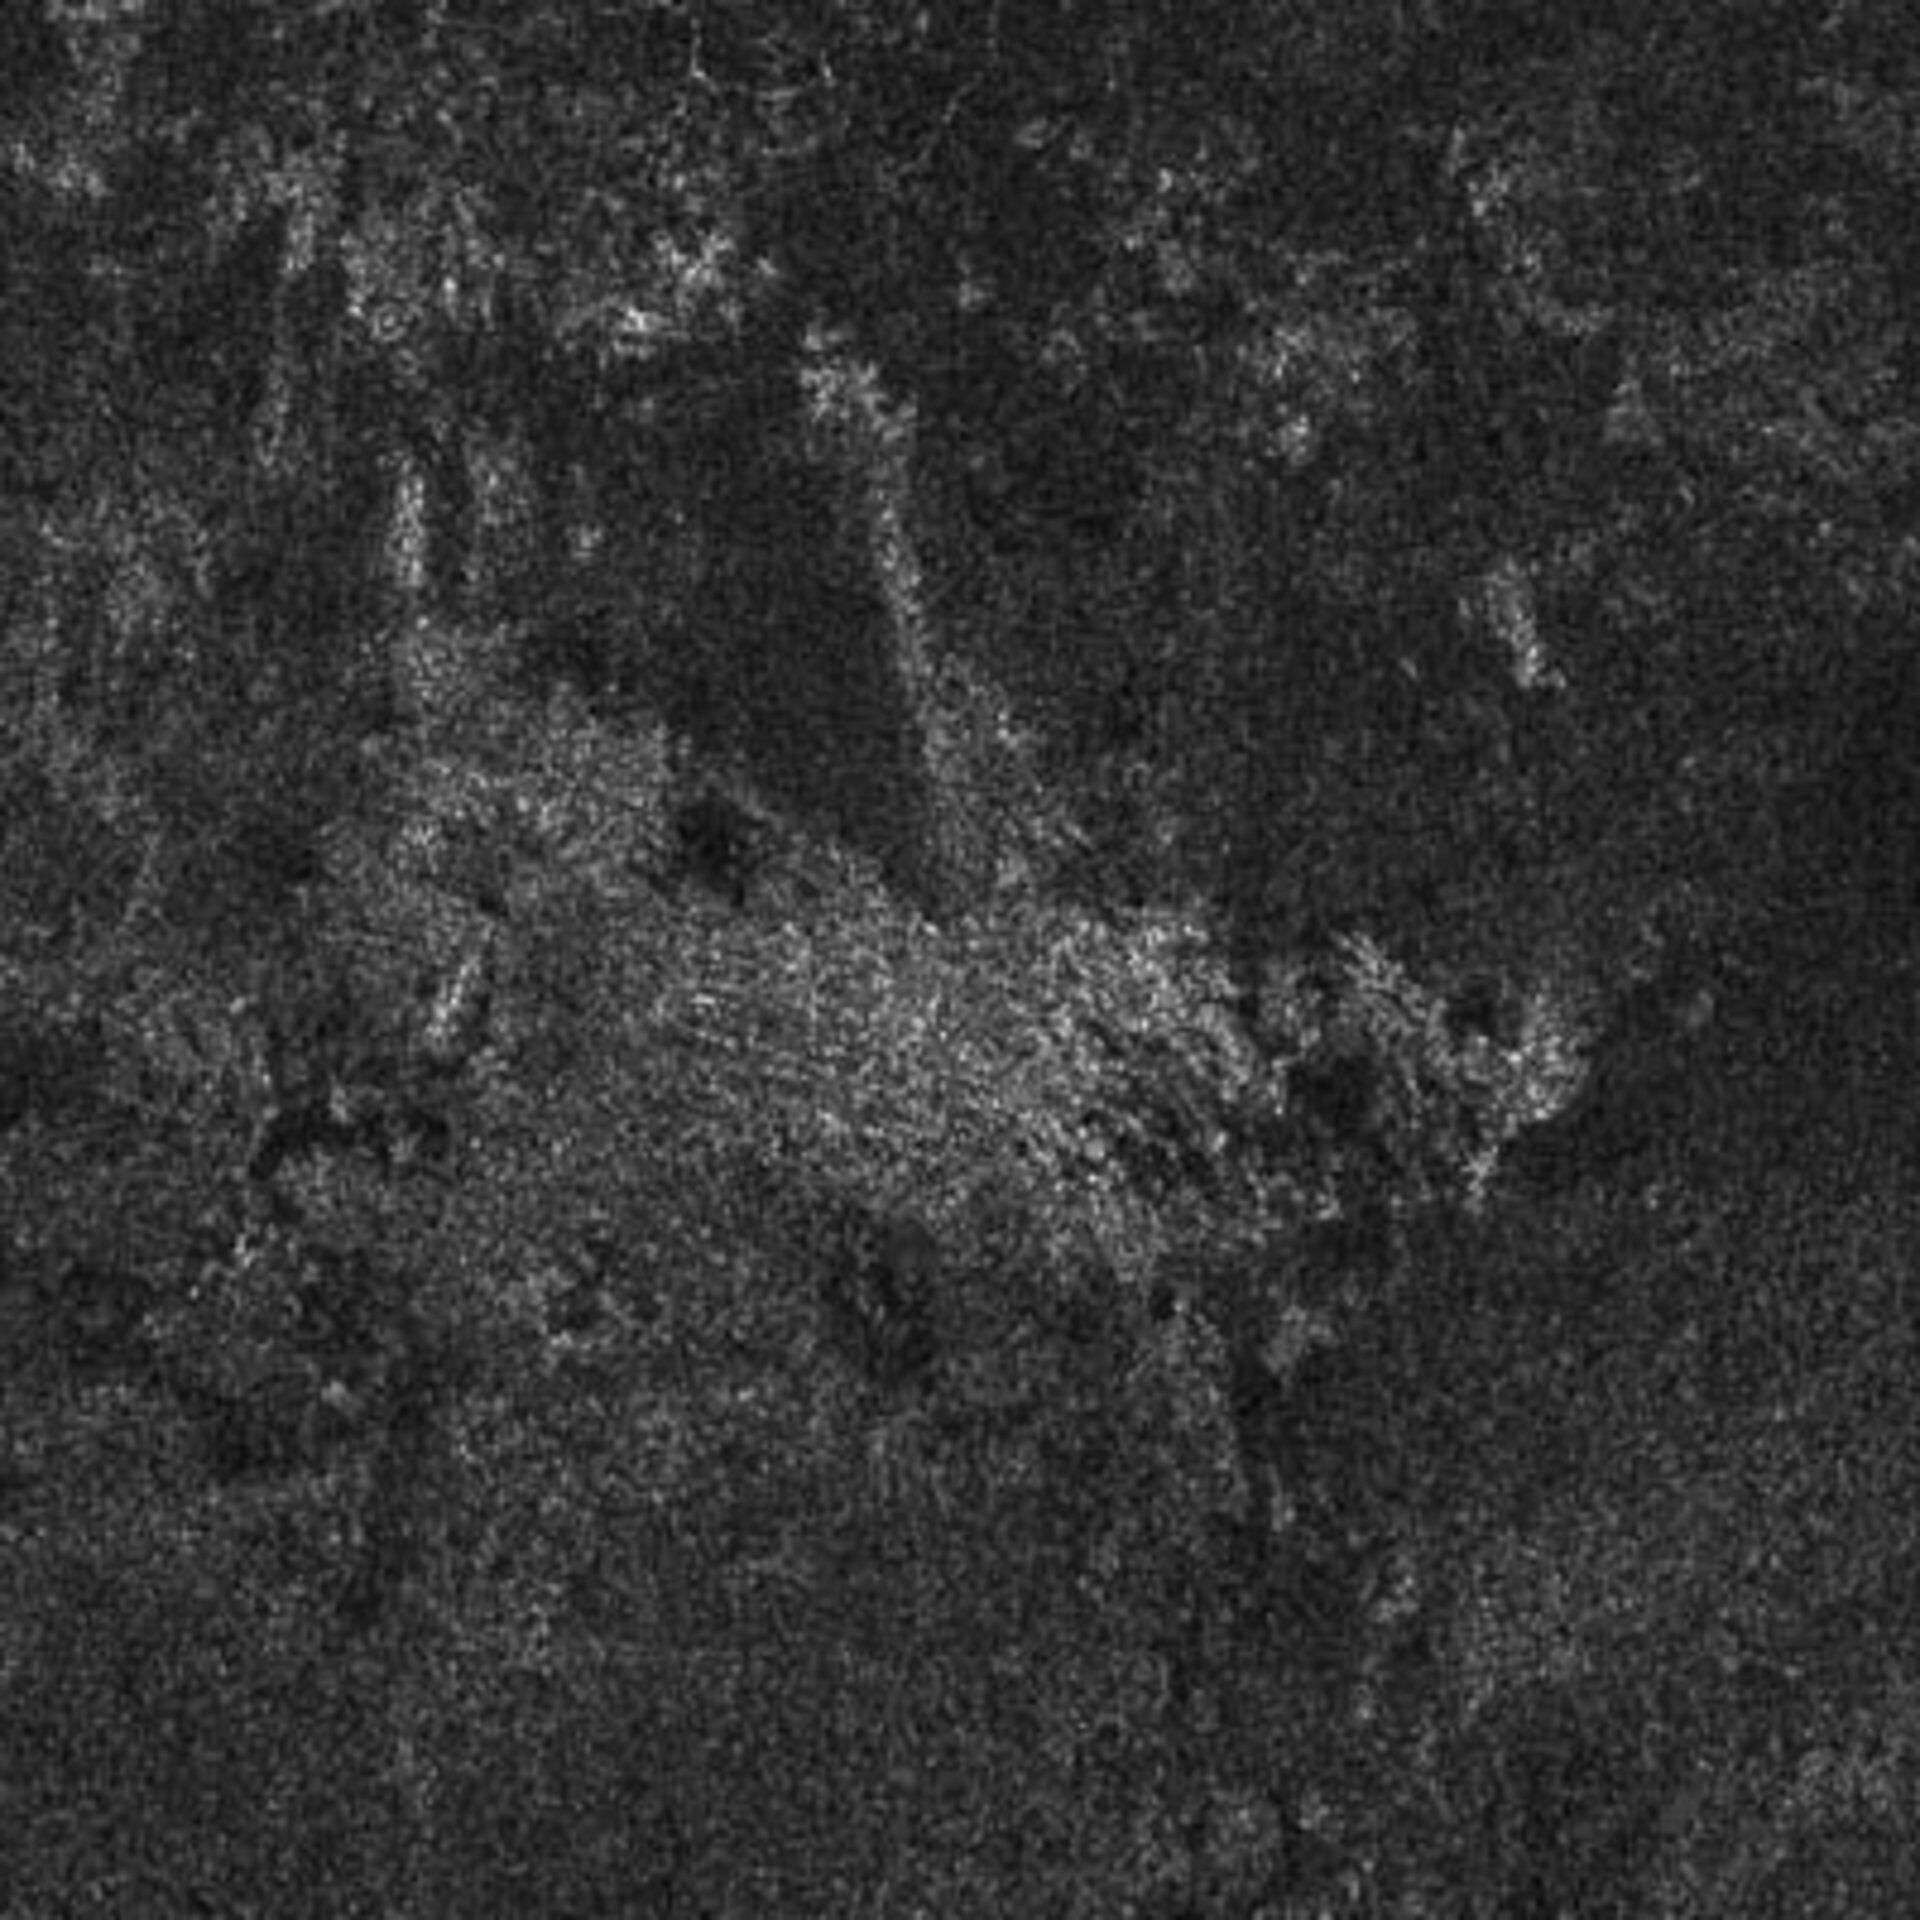 'Arrowhead'-shaped feature on Titan's surface